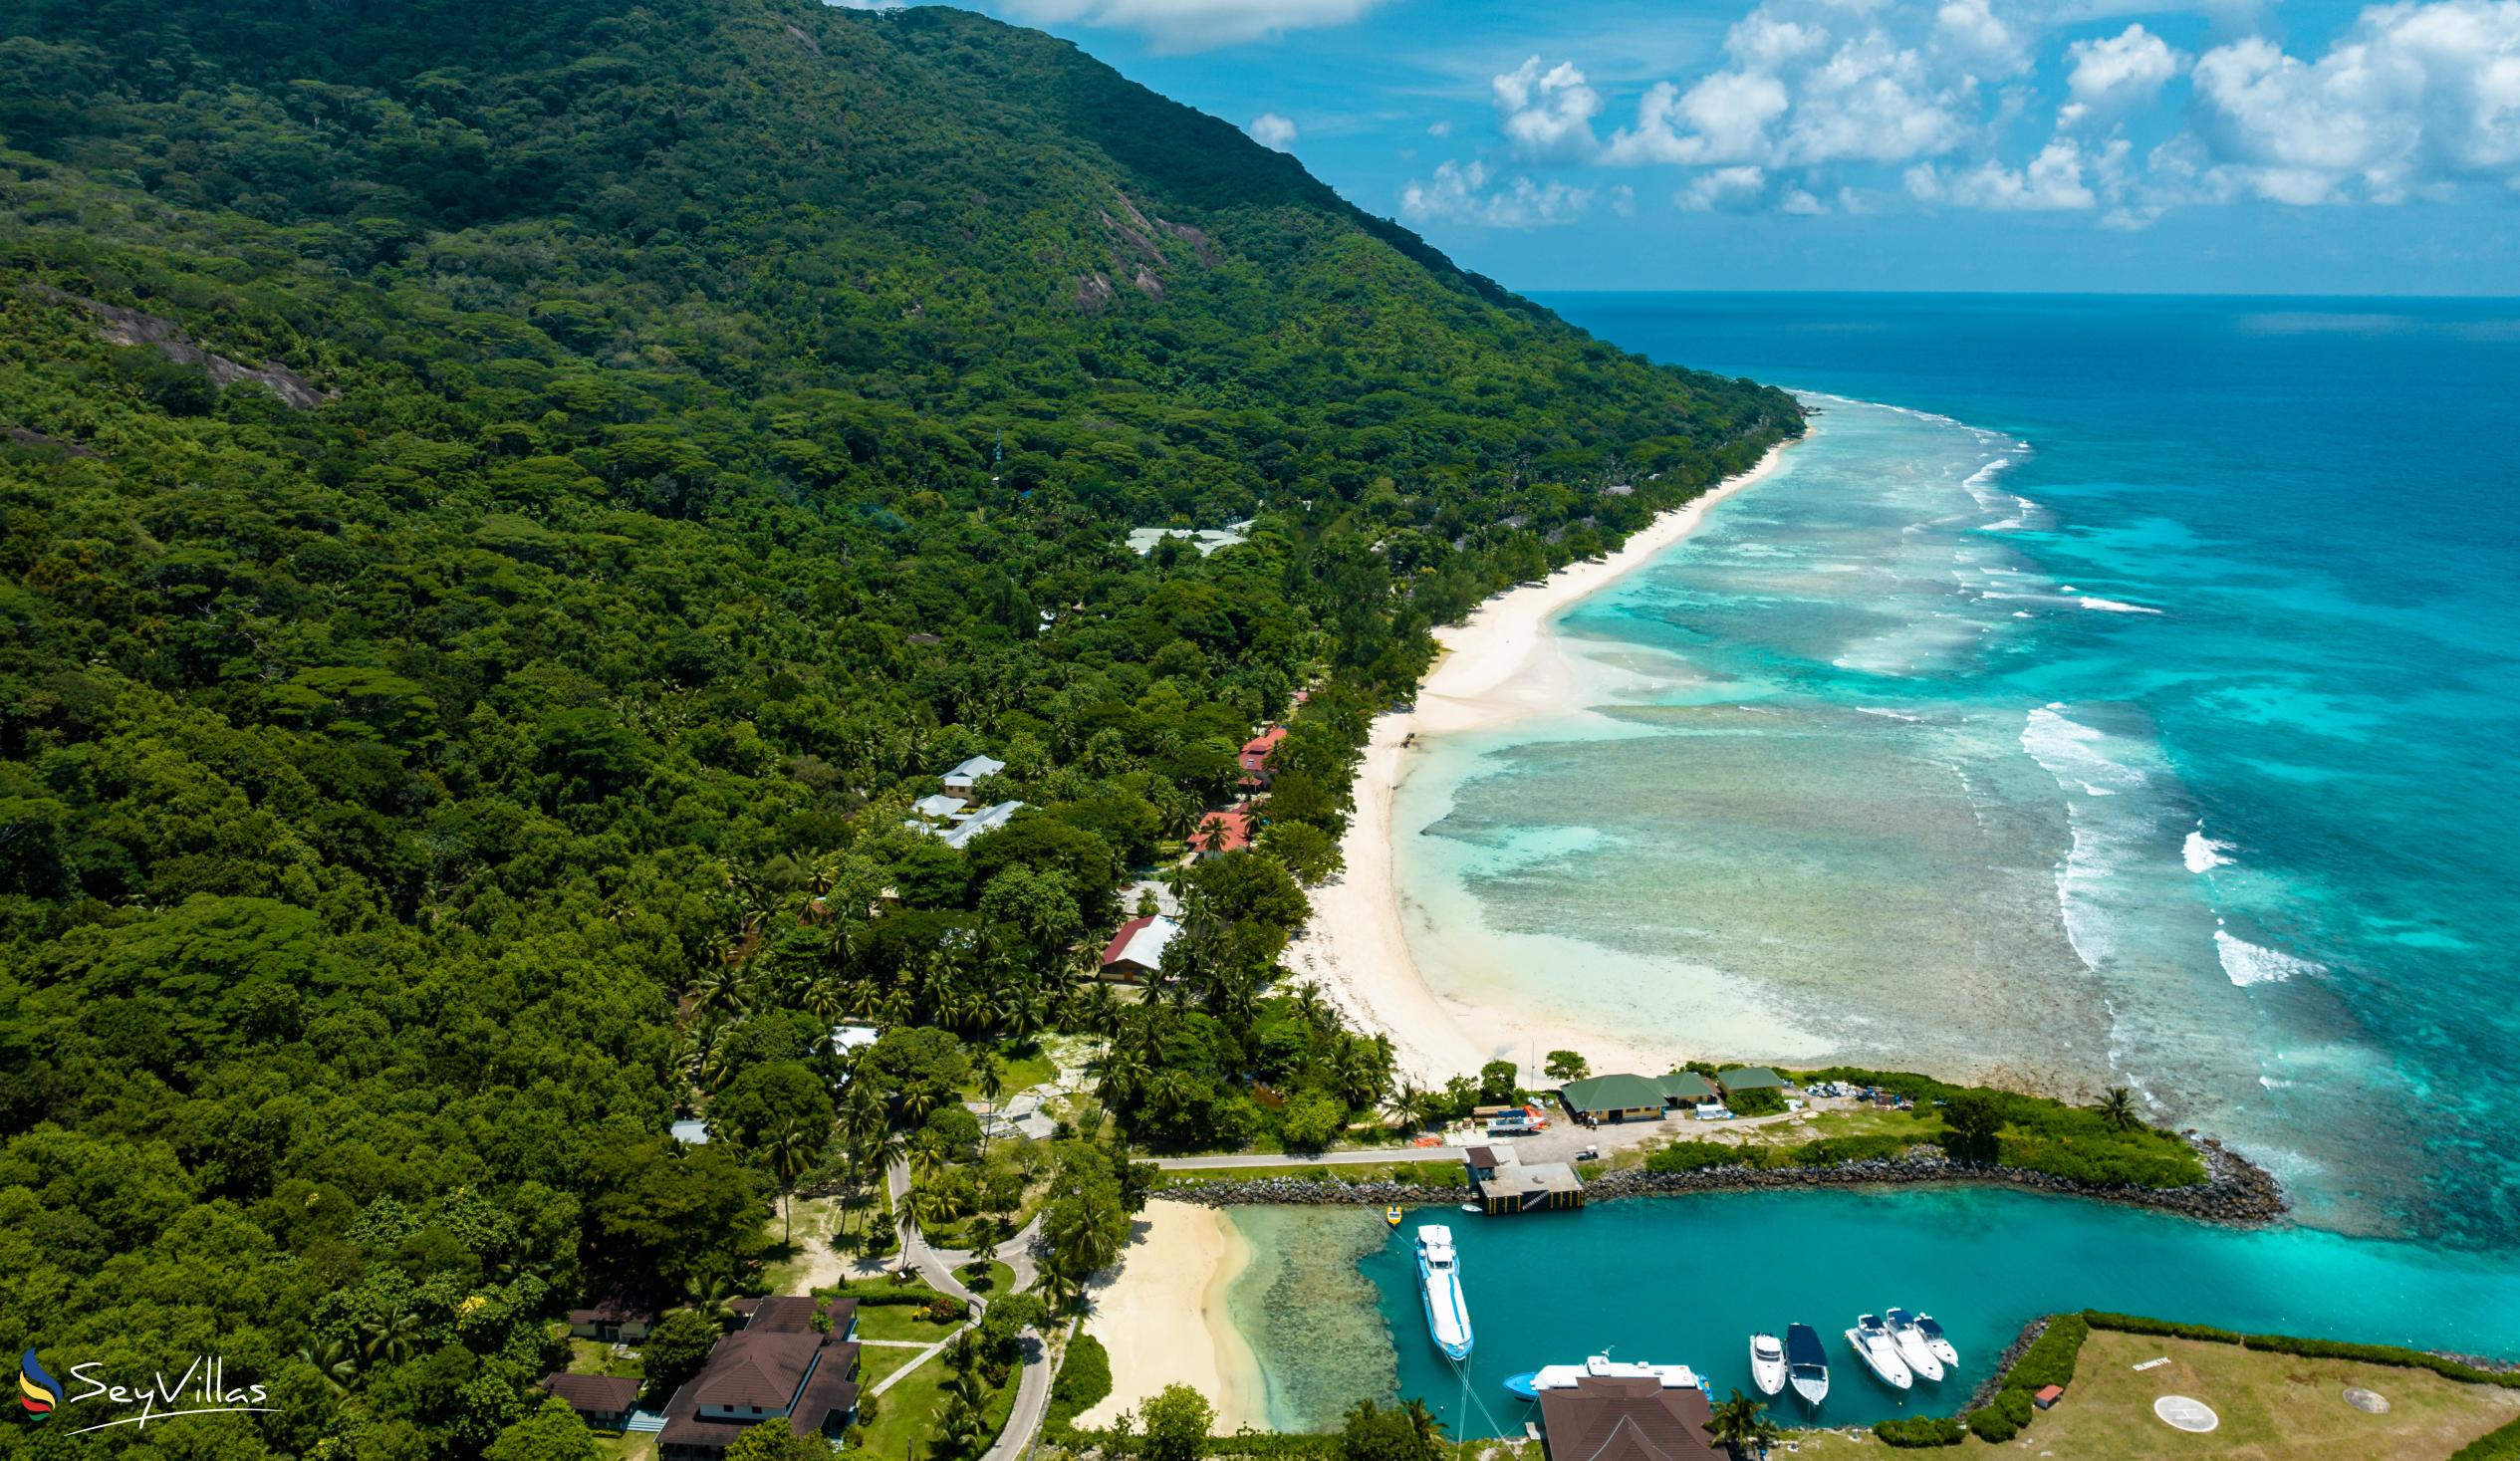 Photo 98: La Belle Tortue - Location - Silhouette Island (Seychelles)